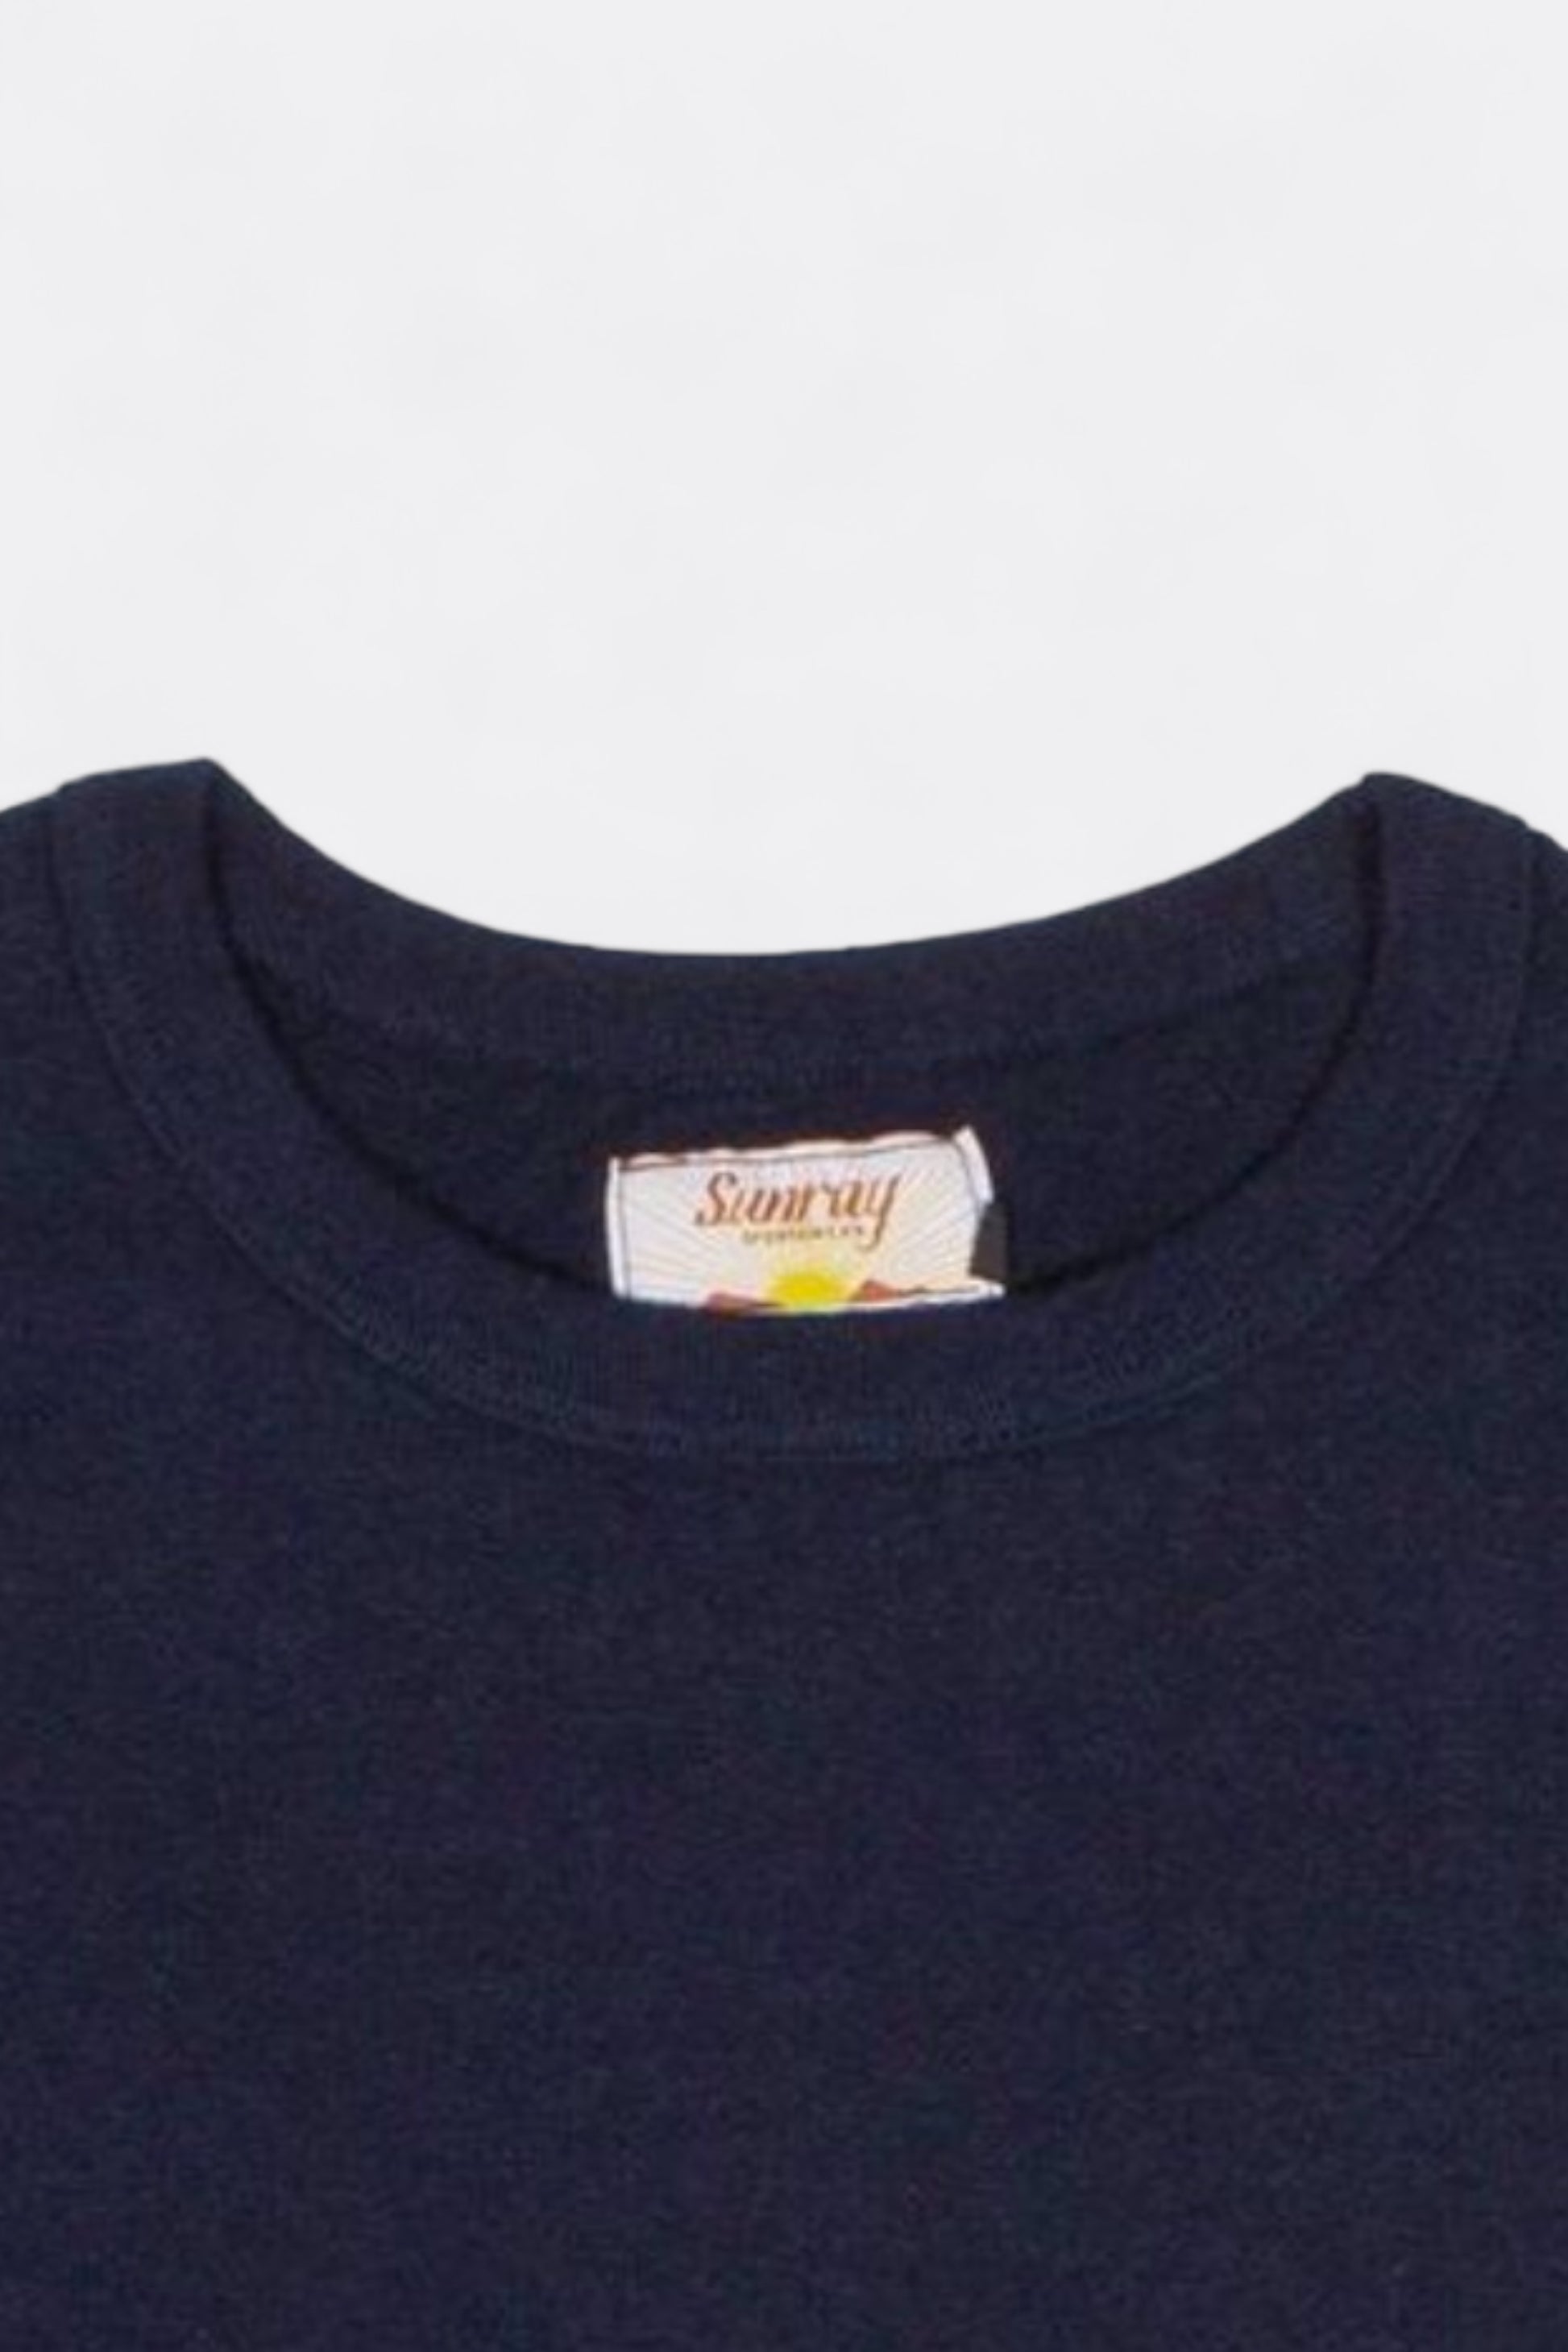 Sunray - Haleiwa T-Shirt (Dark Navy)